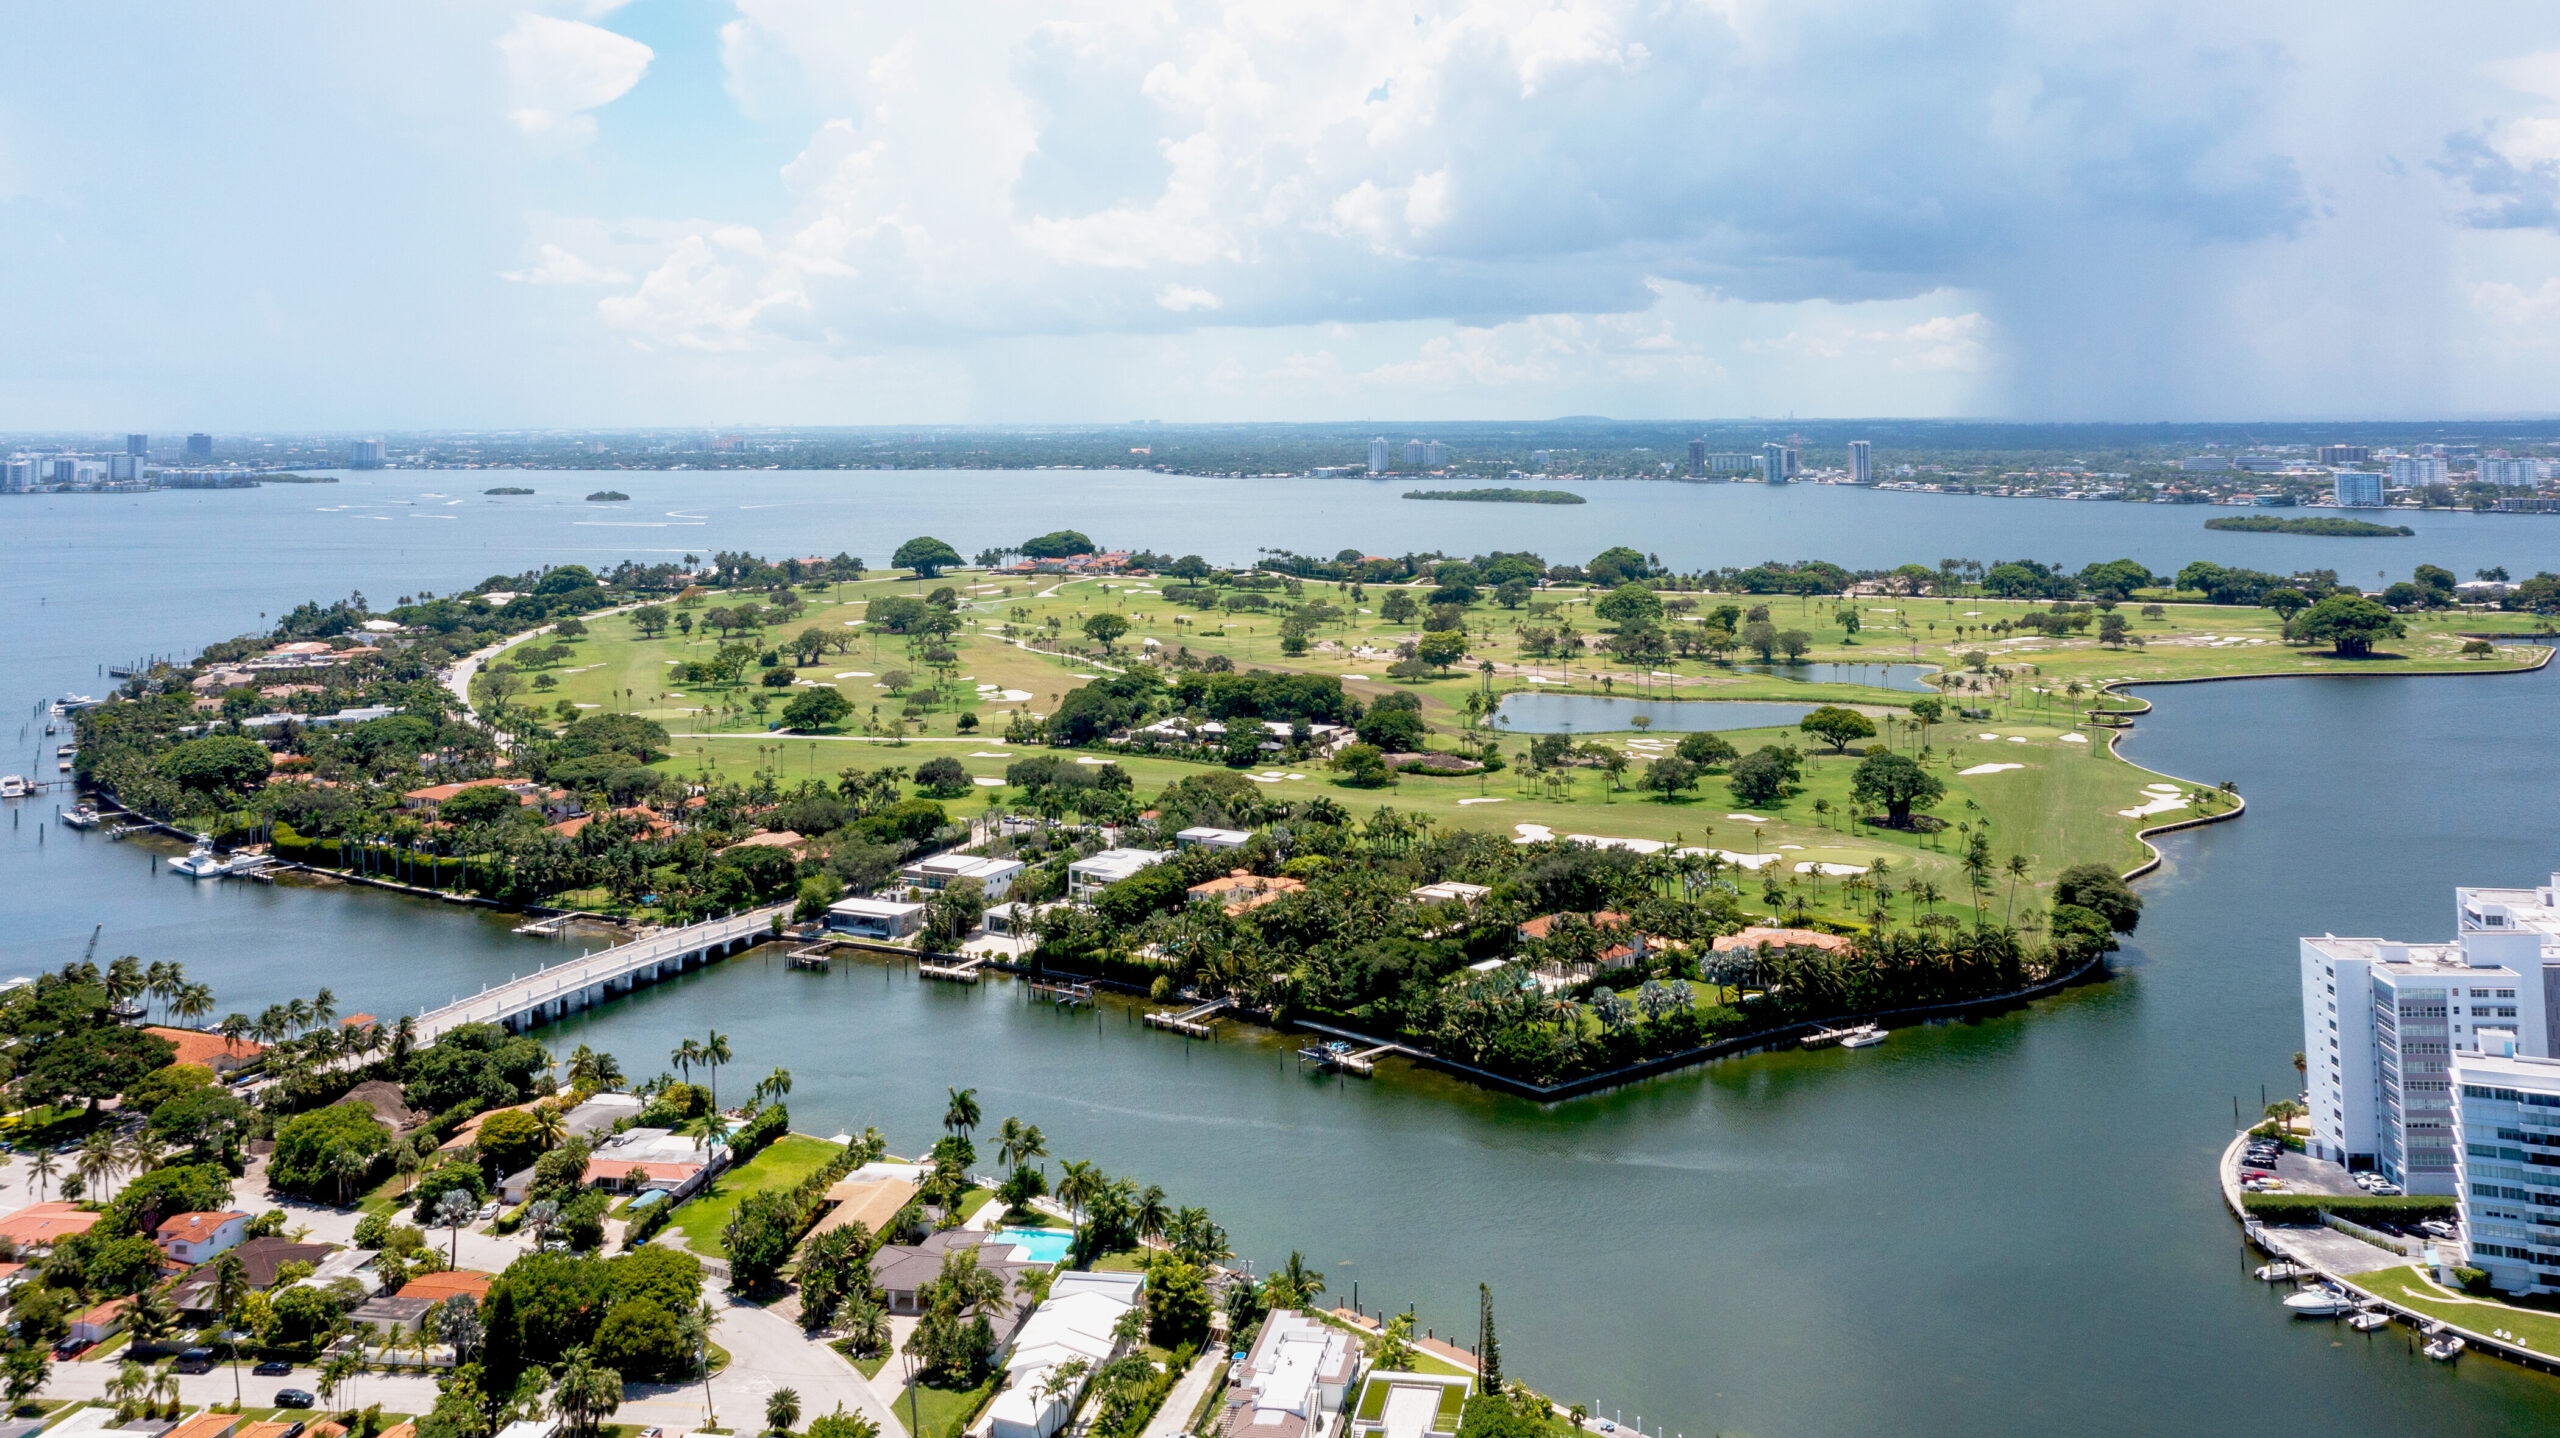 Indian Creek Island: Miami’s “Billionaire Bunker” where Billionaires, Celebrities, and DJs own the most impressive estates in South Florida.